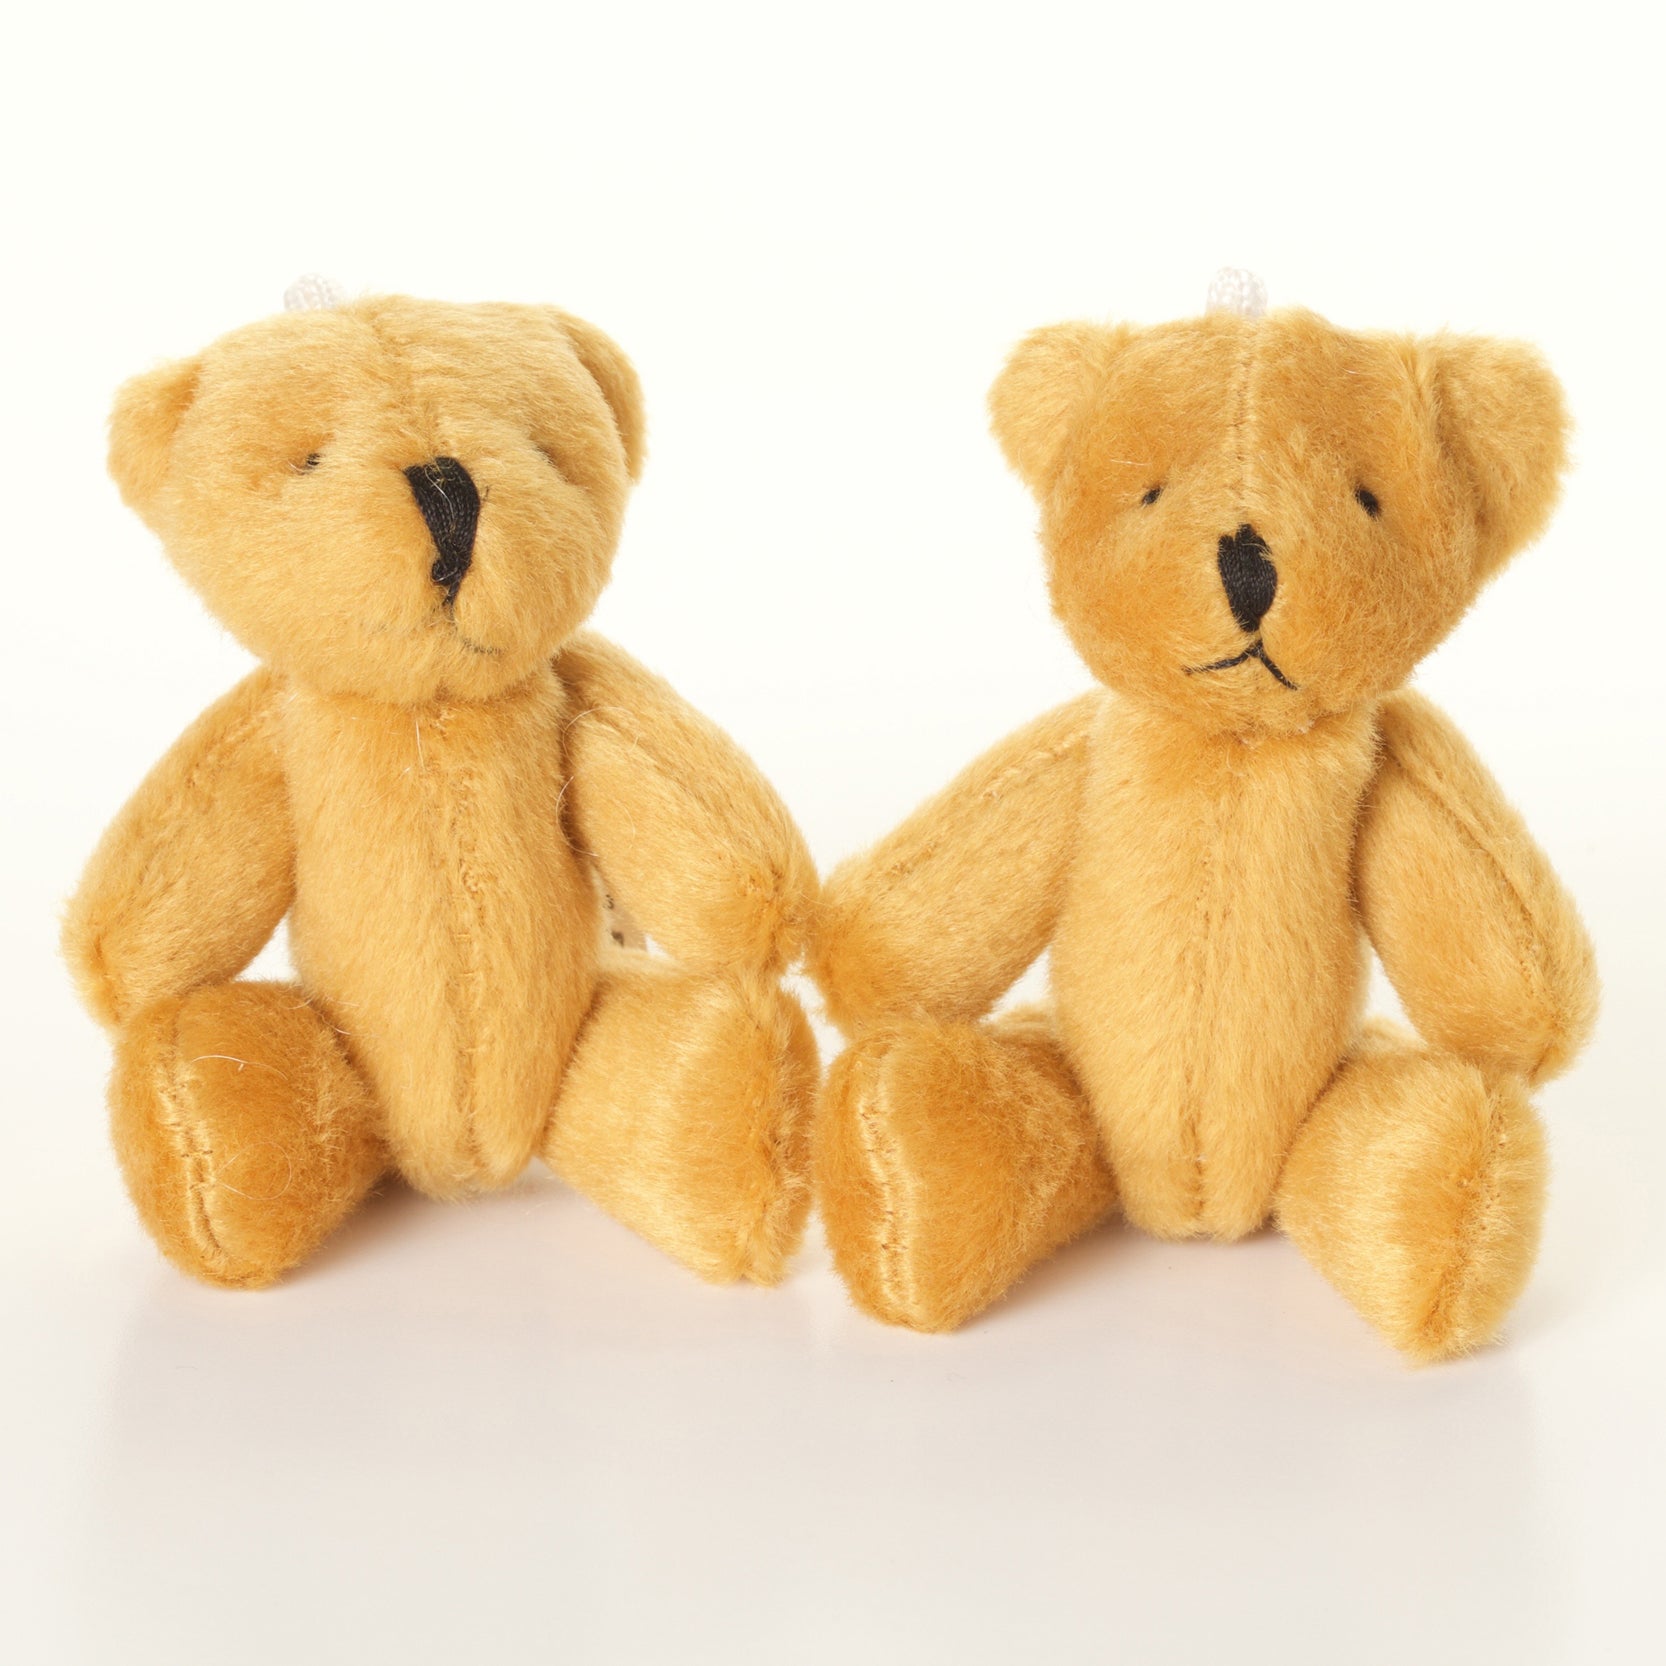 Small BROWN Teddy Bears X 40 - Cute Soft Adorable